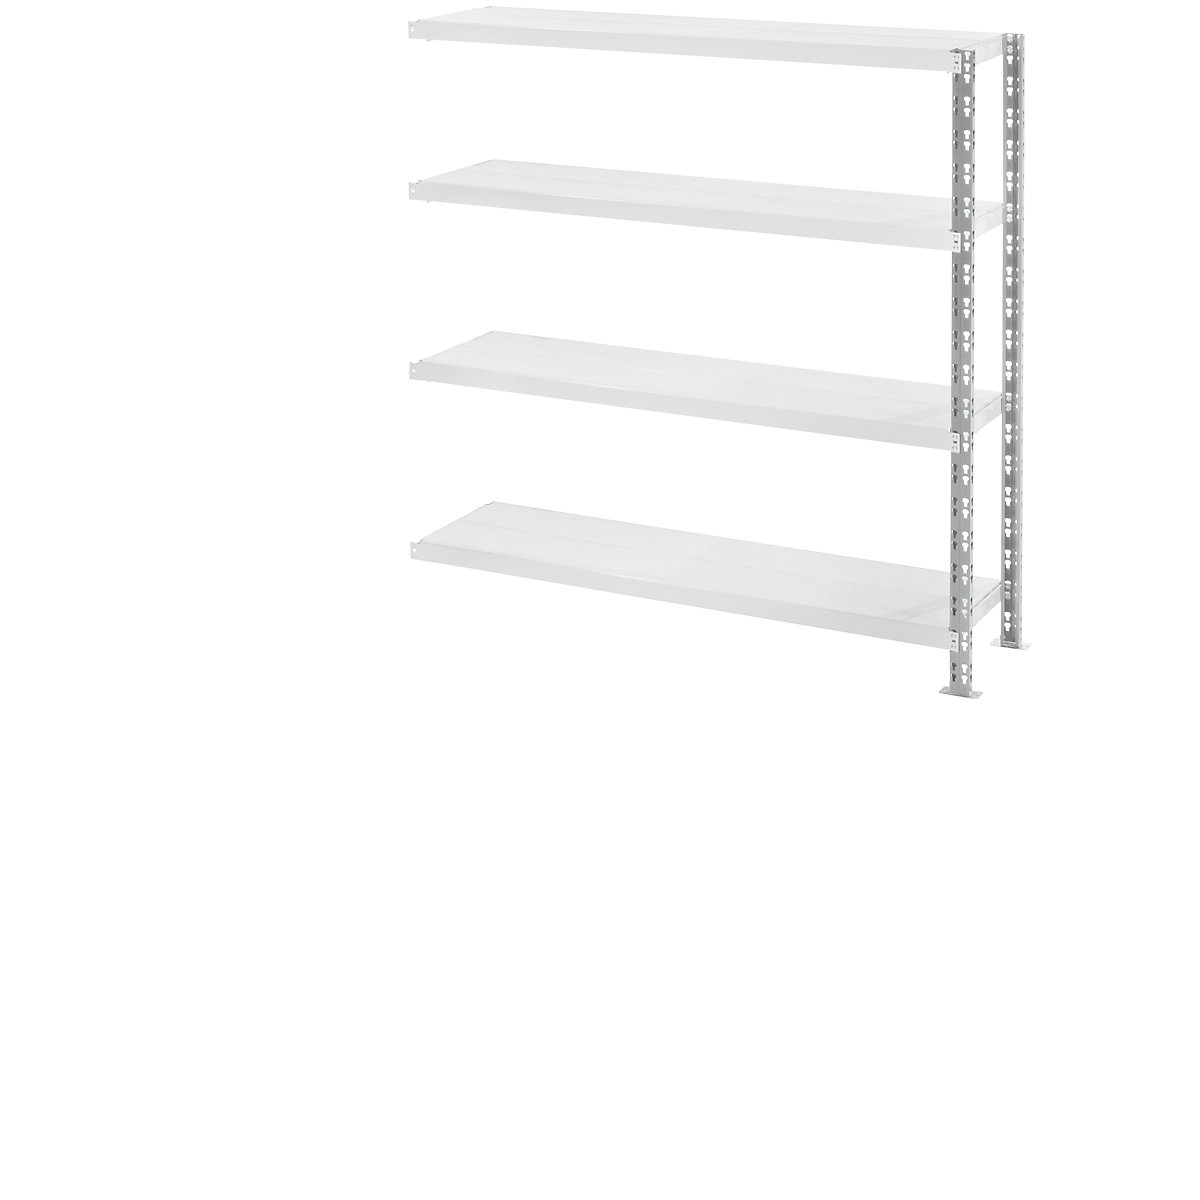 Wide span shelf unit with sheet steel shelves, depth 400 mm, extension shelf unit, HxW 1508 x 1525 mm